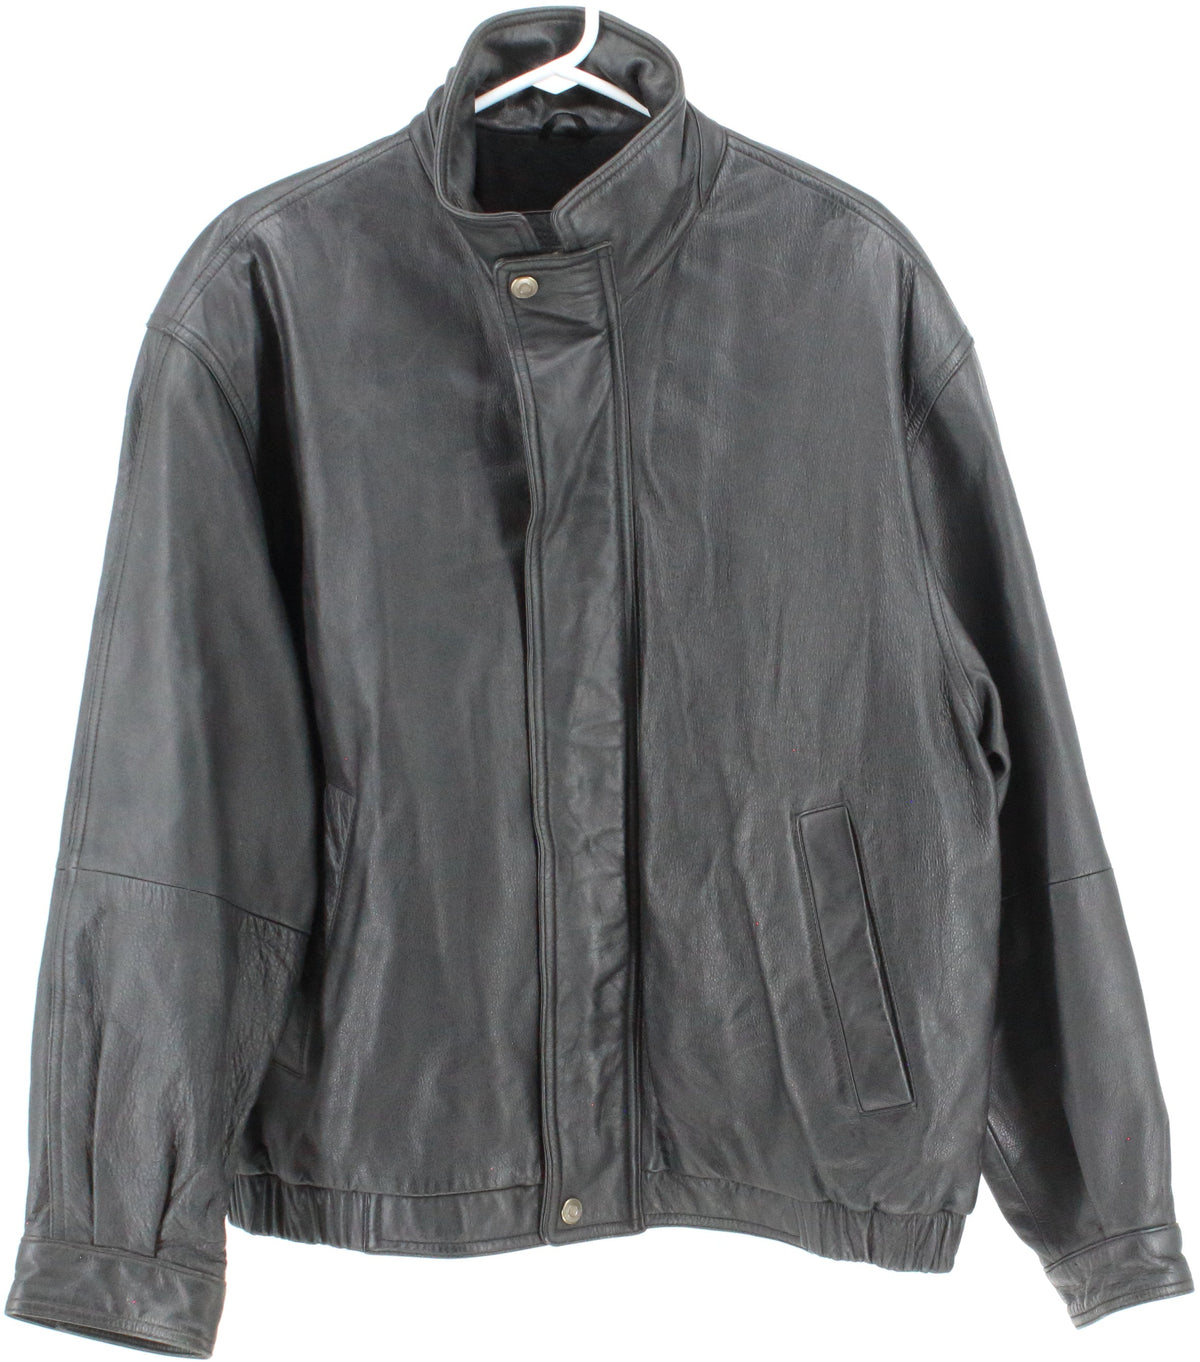 John Ashford Black Leather Jacket